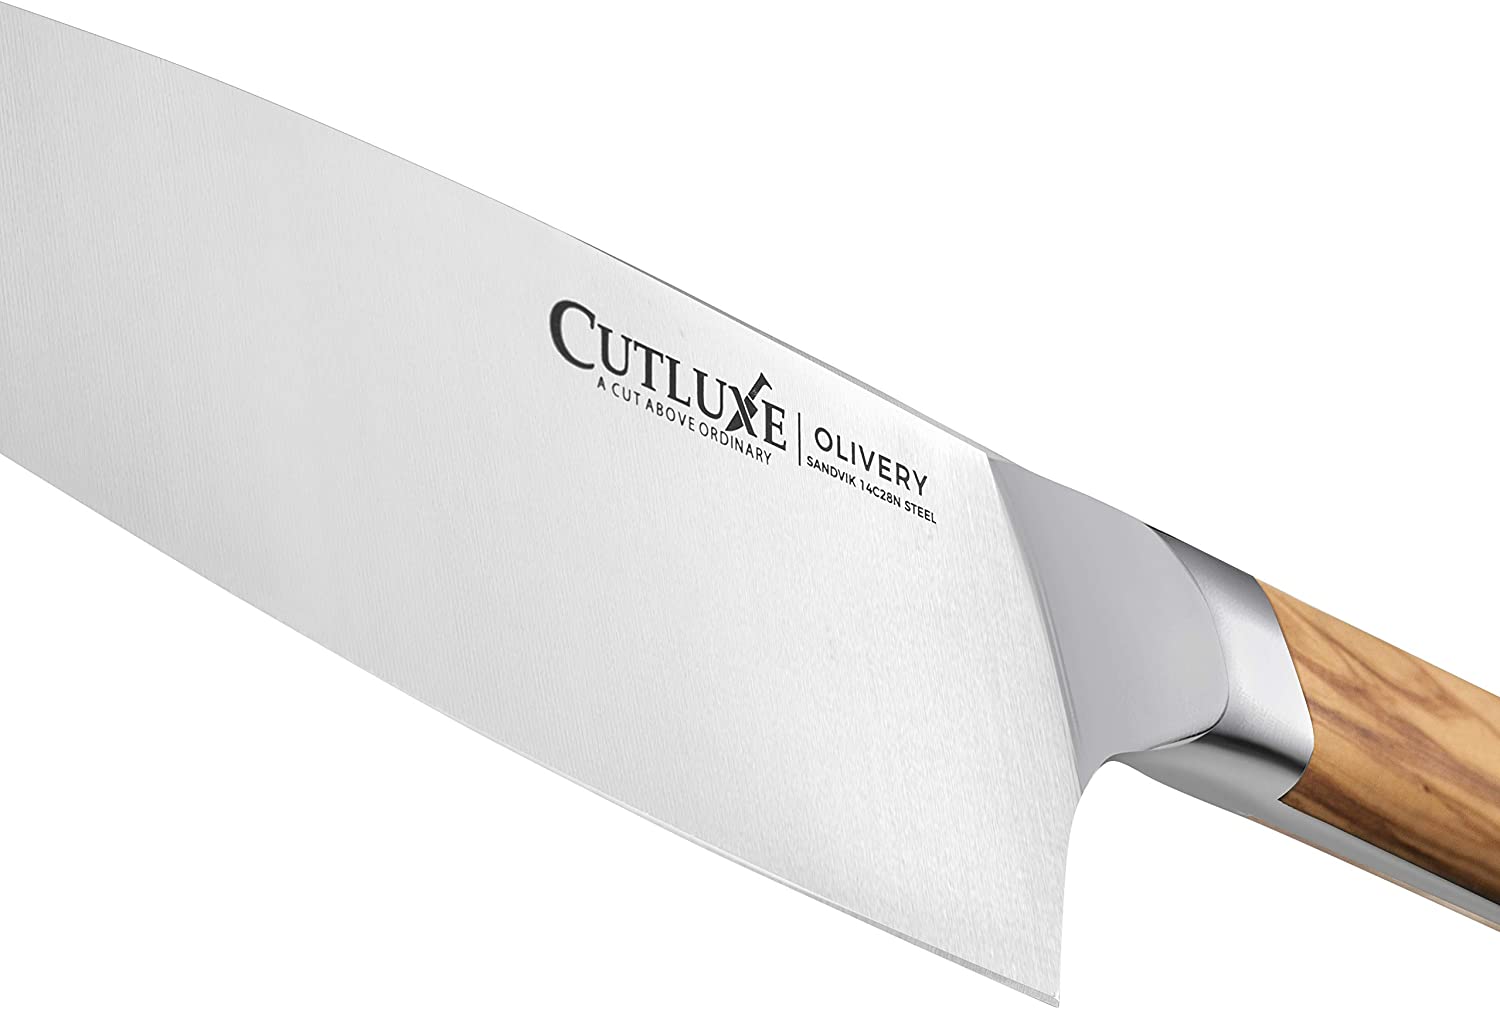 TURWHO 1-2pcs Sandvik 14C28N Stainless Steel Chef Knife Cooking Meat  Cleaver Knife Octagonal Ebony Handle